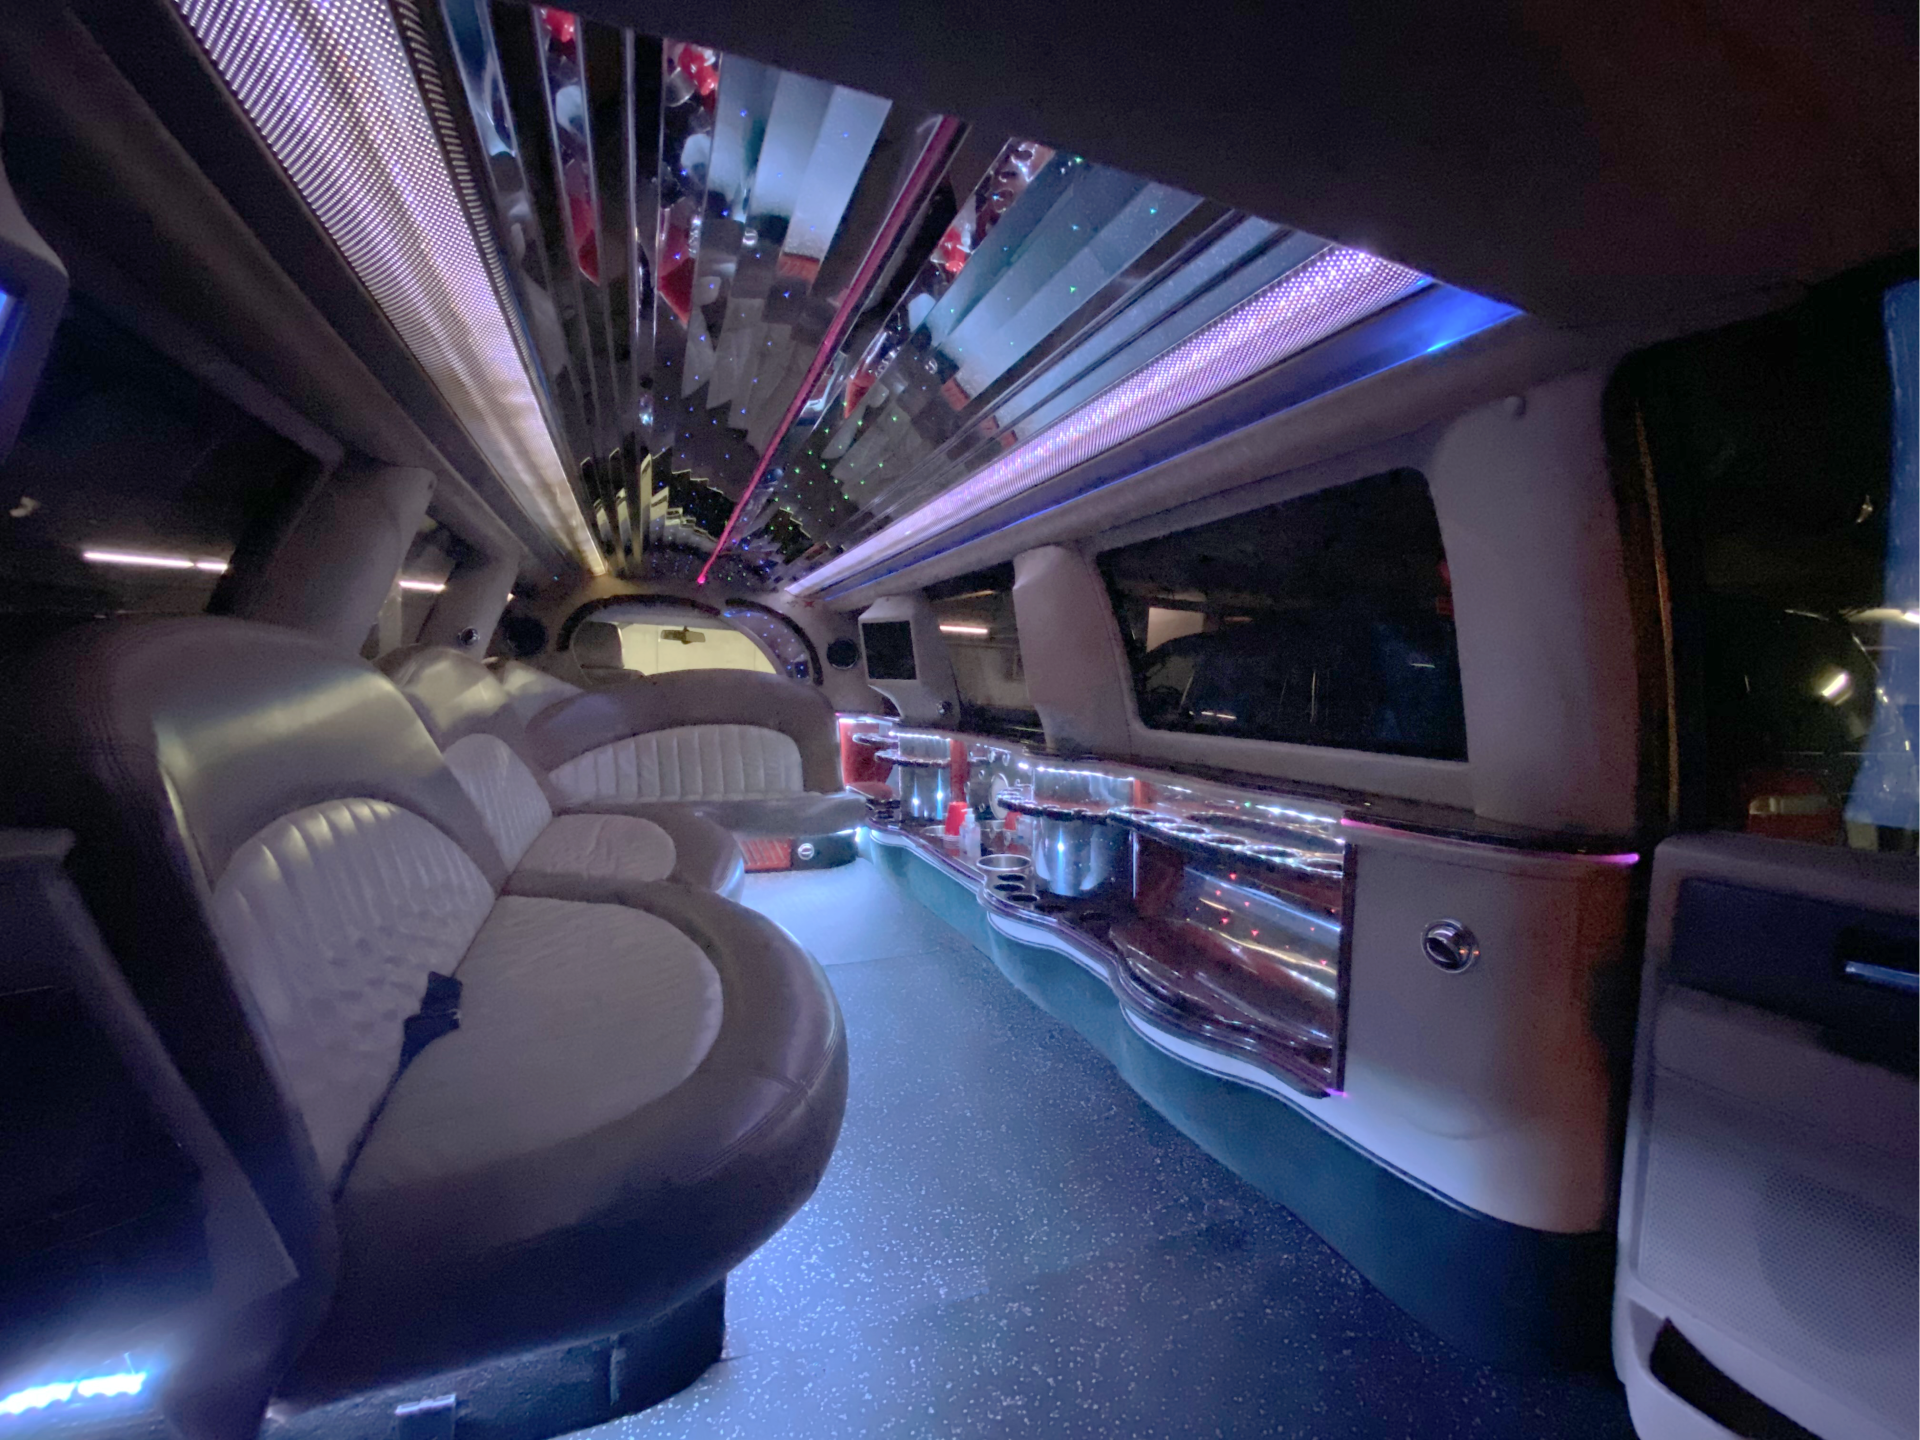 Limo To Go 14 passenger stretch SUV limousine interior seating, LED lighting, bar zone